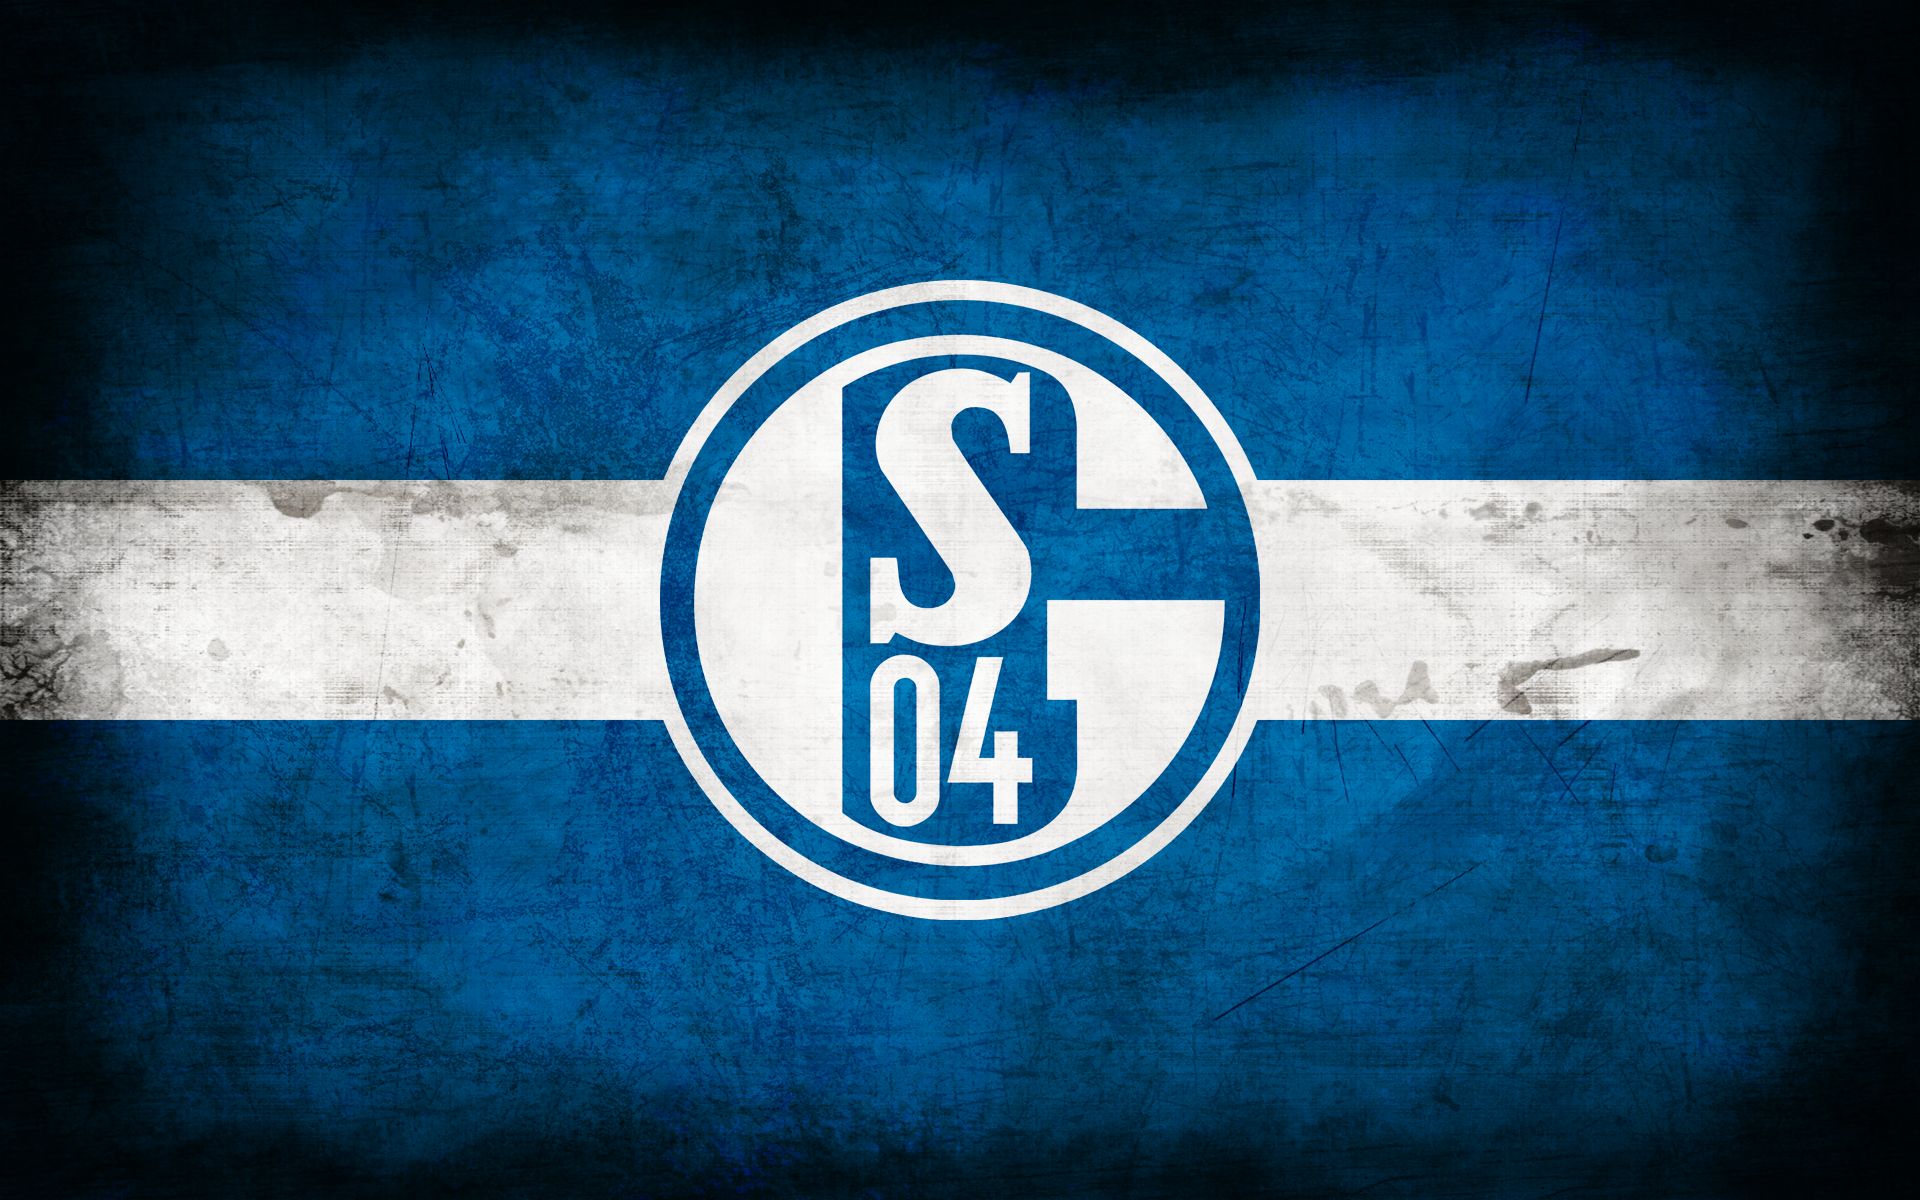 fc schalke 04, sports, emblem, logo, soccer